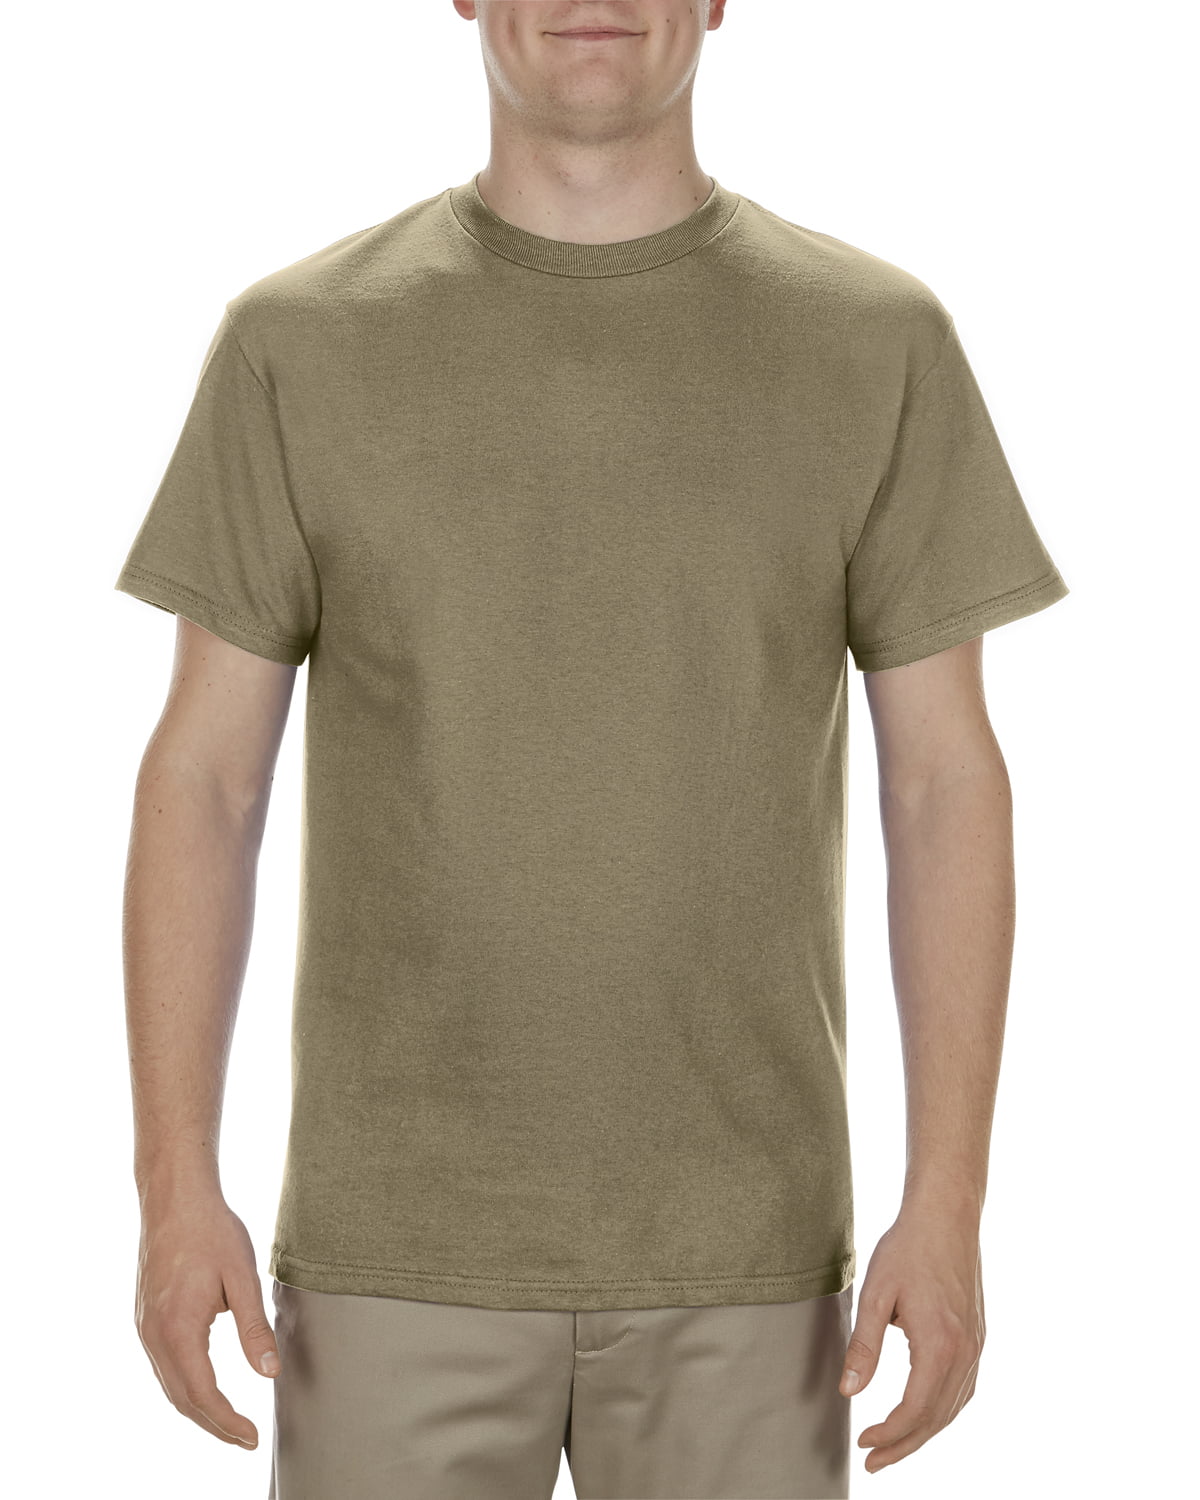 - 5.1 - oz., AL1901 100% Adult Cotton Heather Large Navy Alstyle T-Shirt